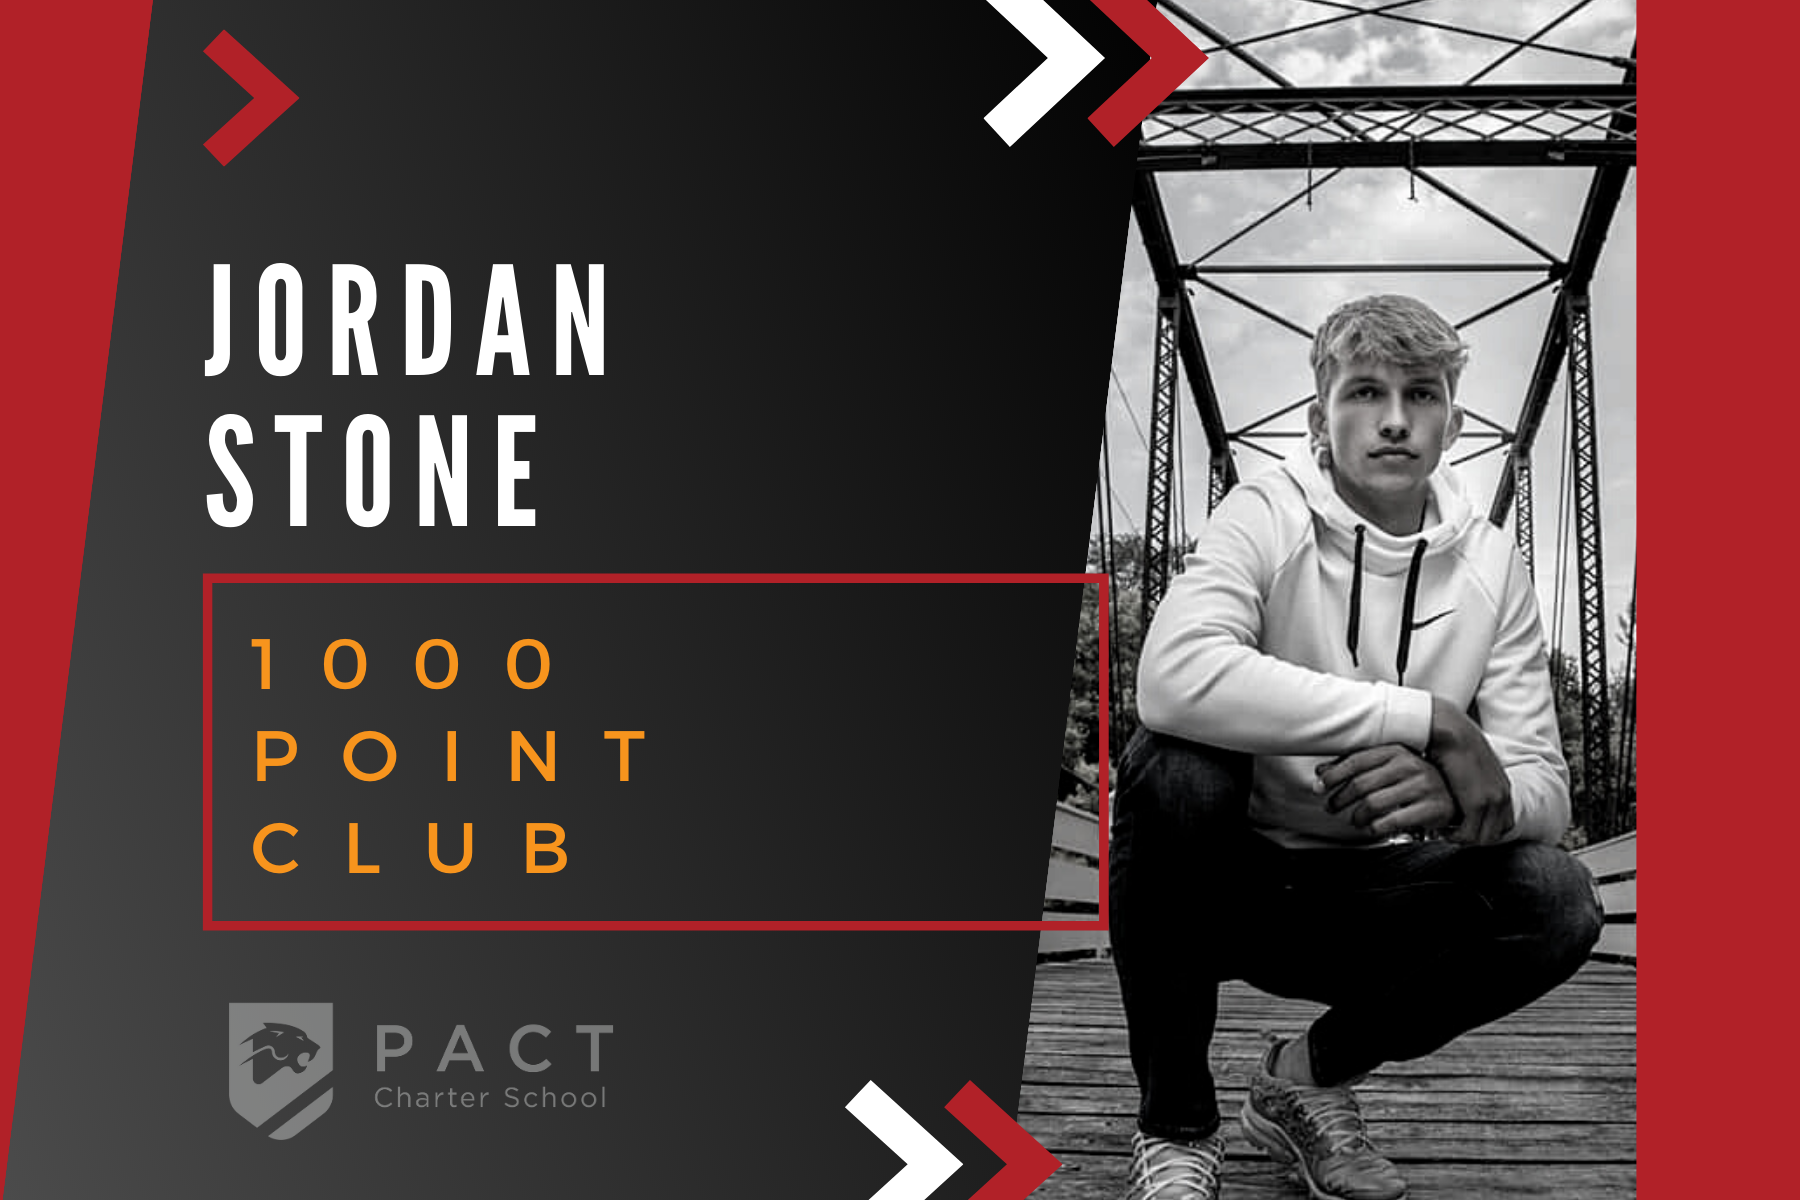 Jordan Stone Joins 1,000 Point Club